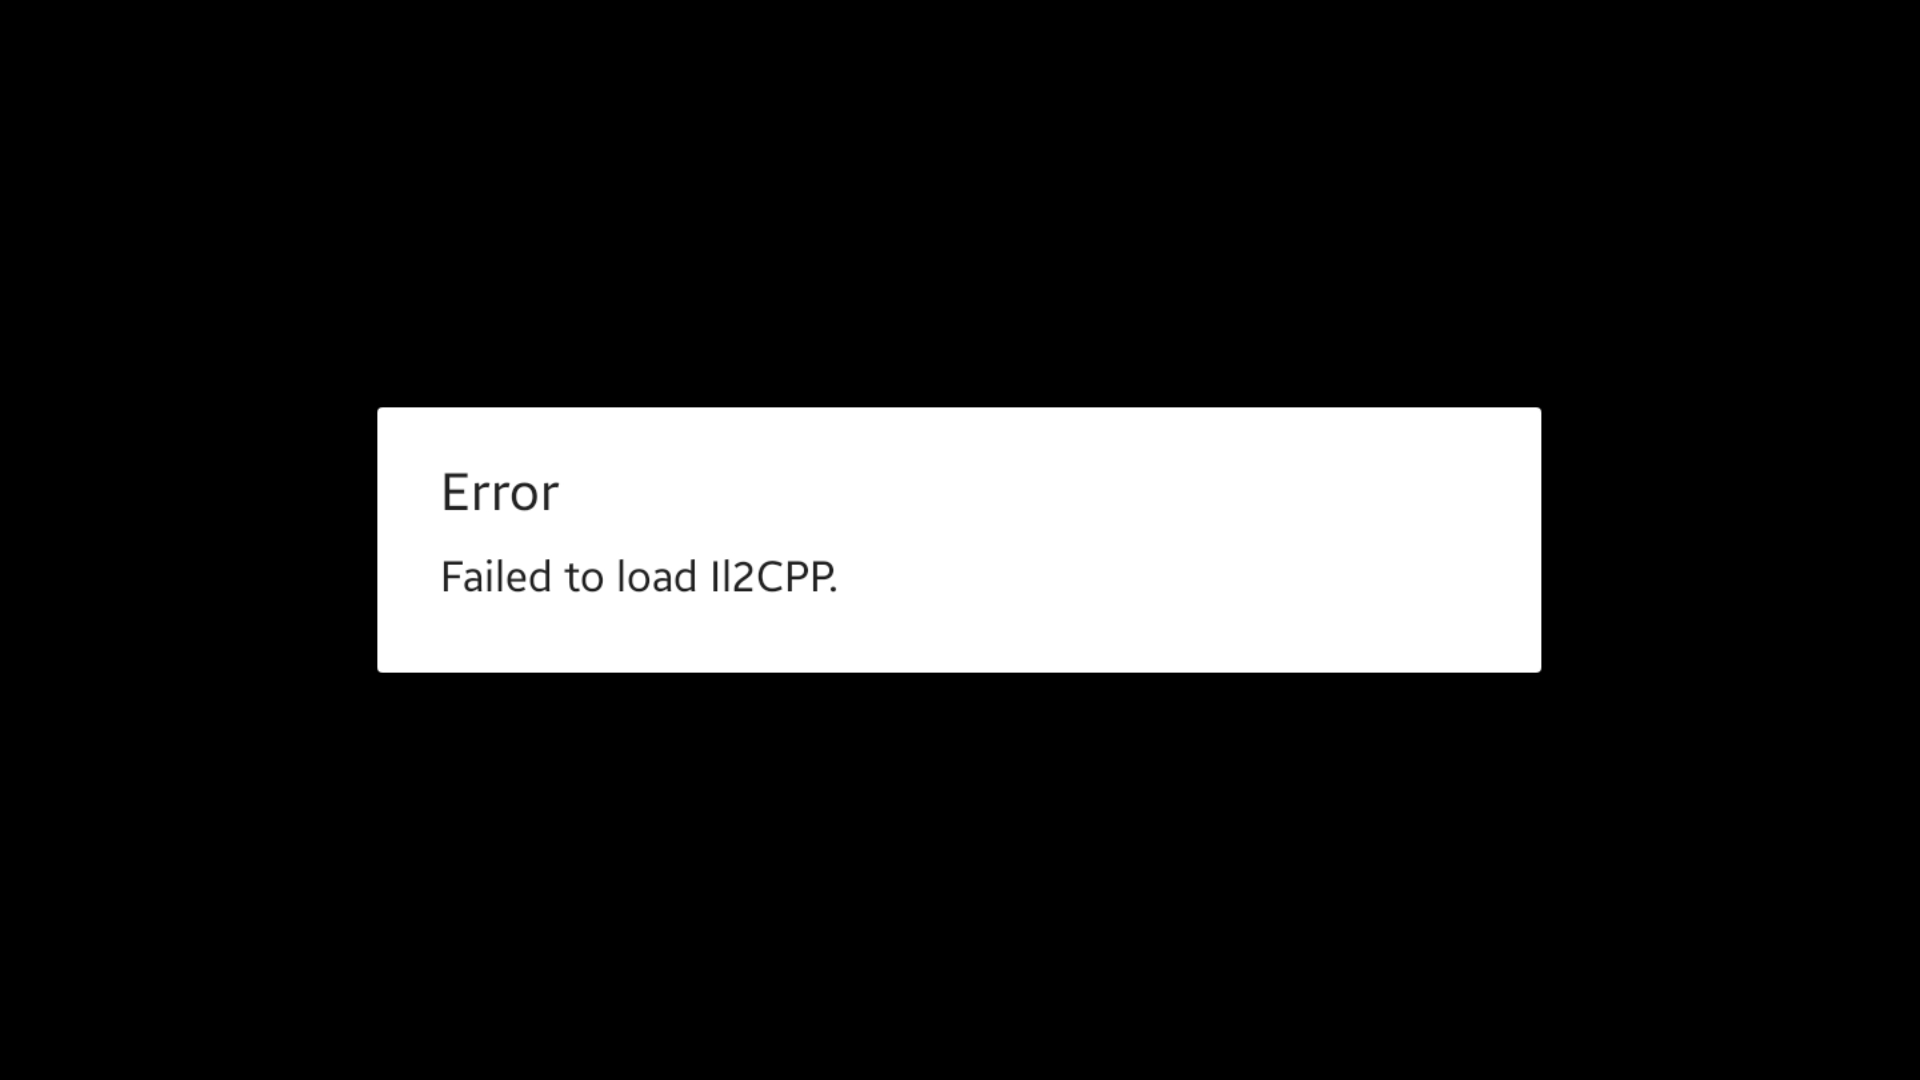 ERROR: FAILED TO LOAD Il2CPP.